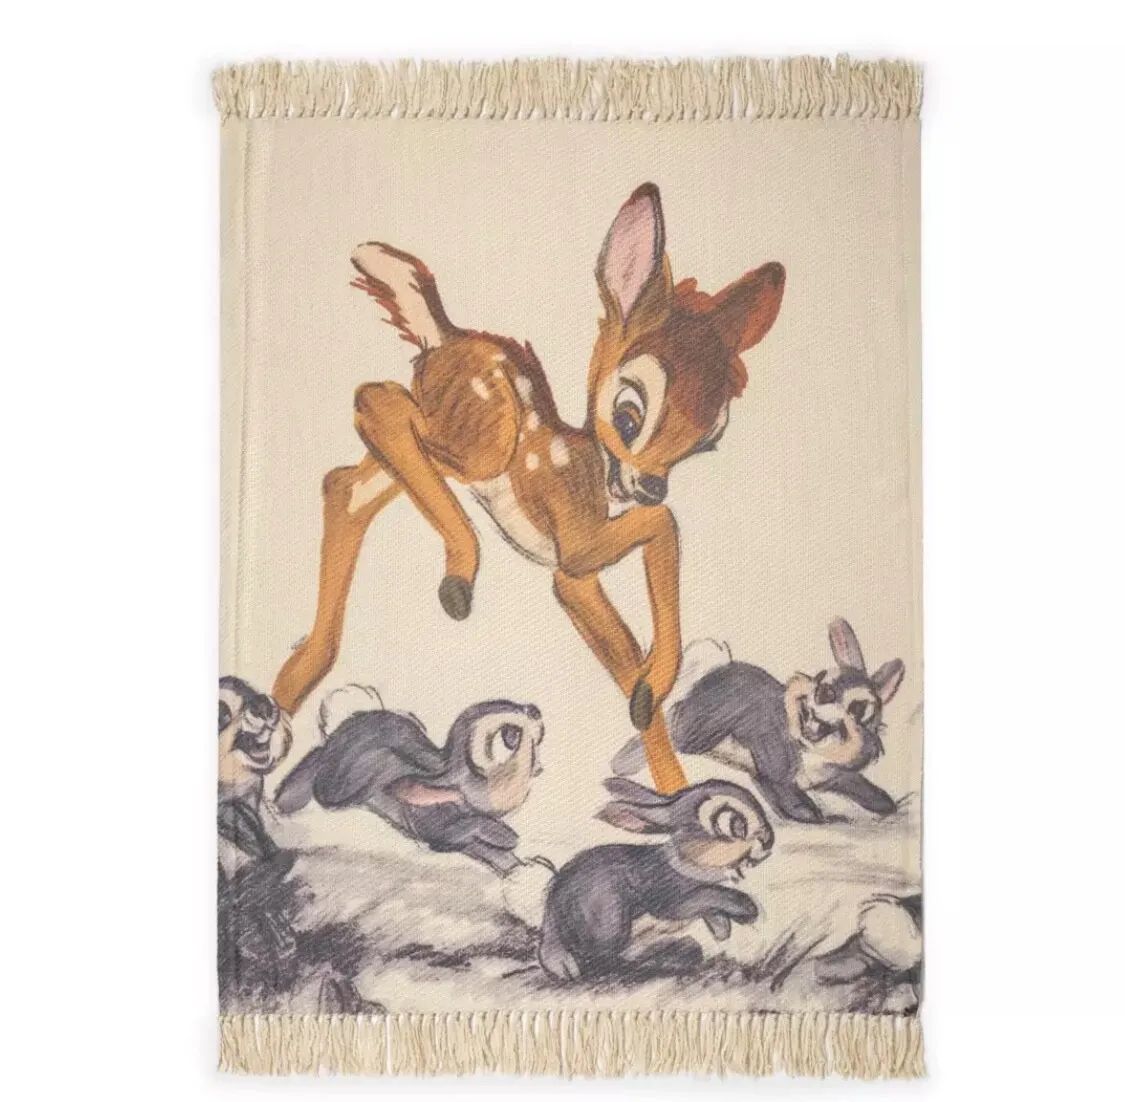 Disney Bambi Throw Blanket 50" x 60" Sketch / NEW  | eBay | eBay US